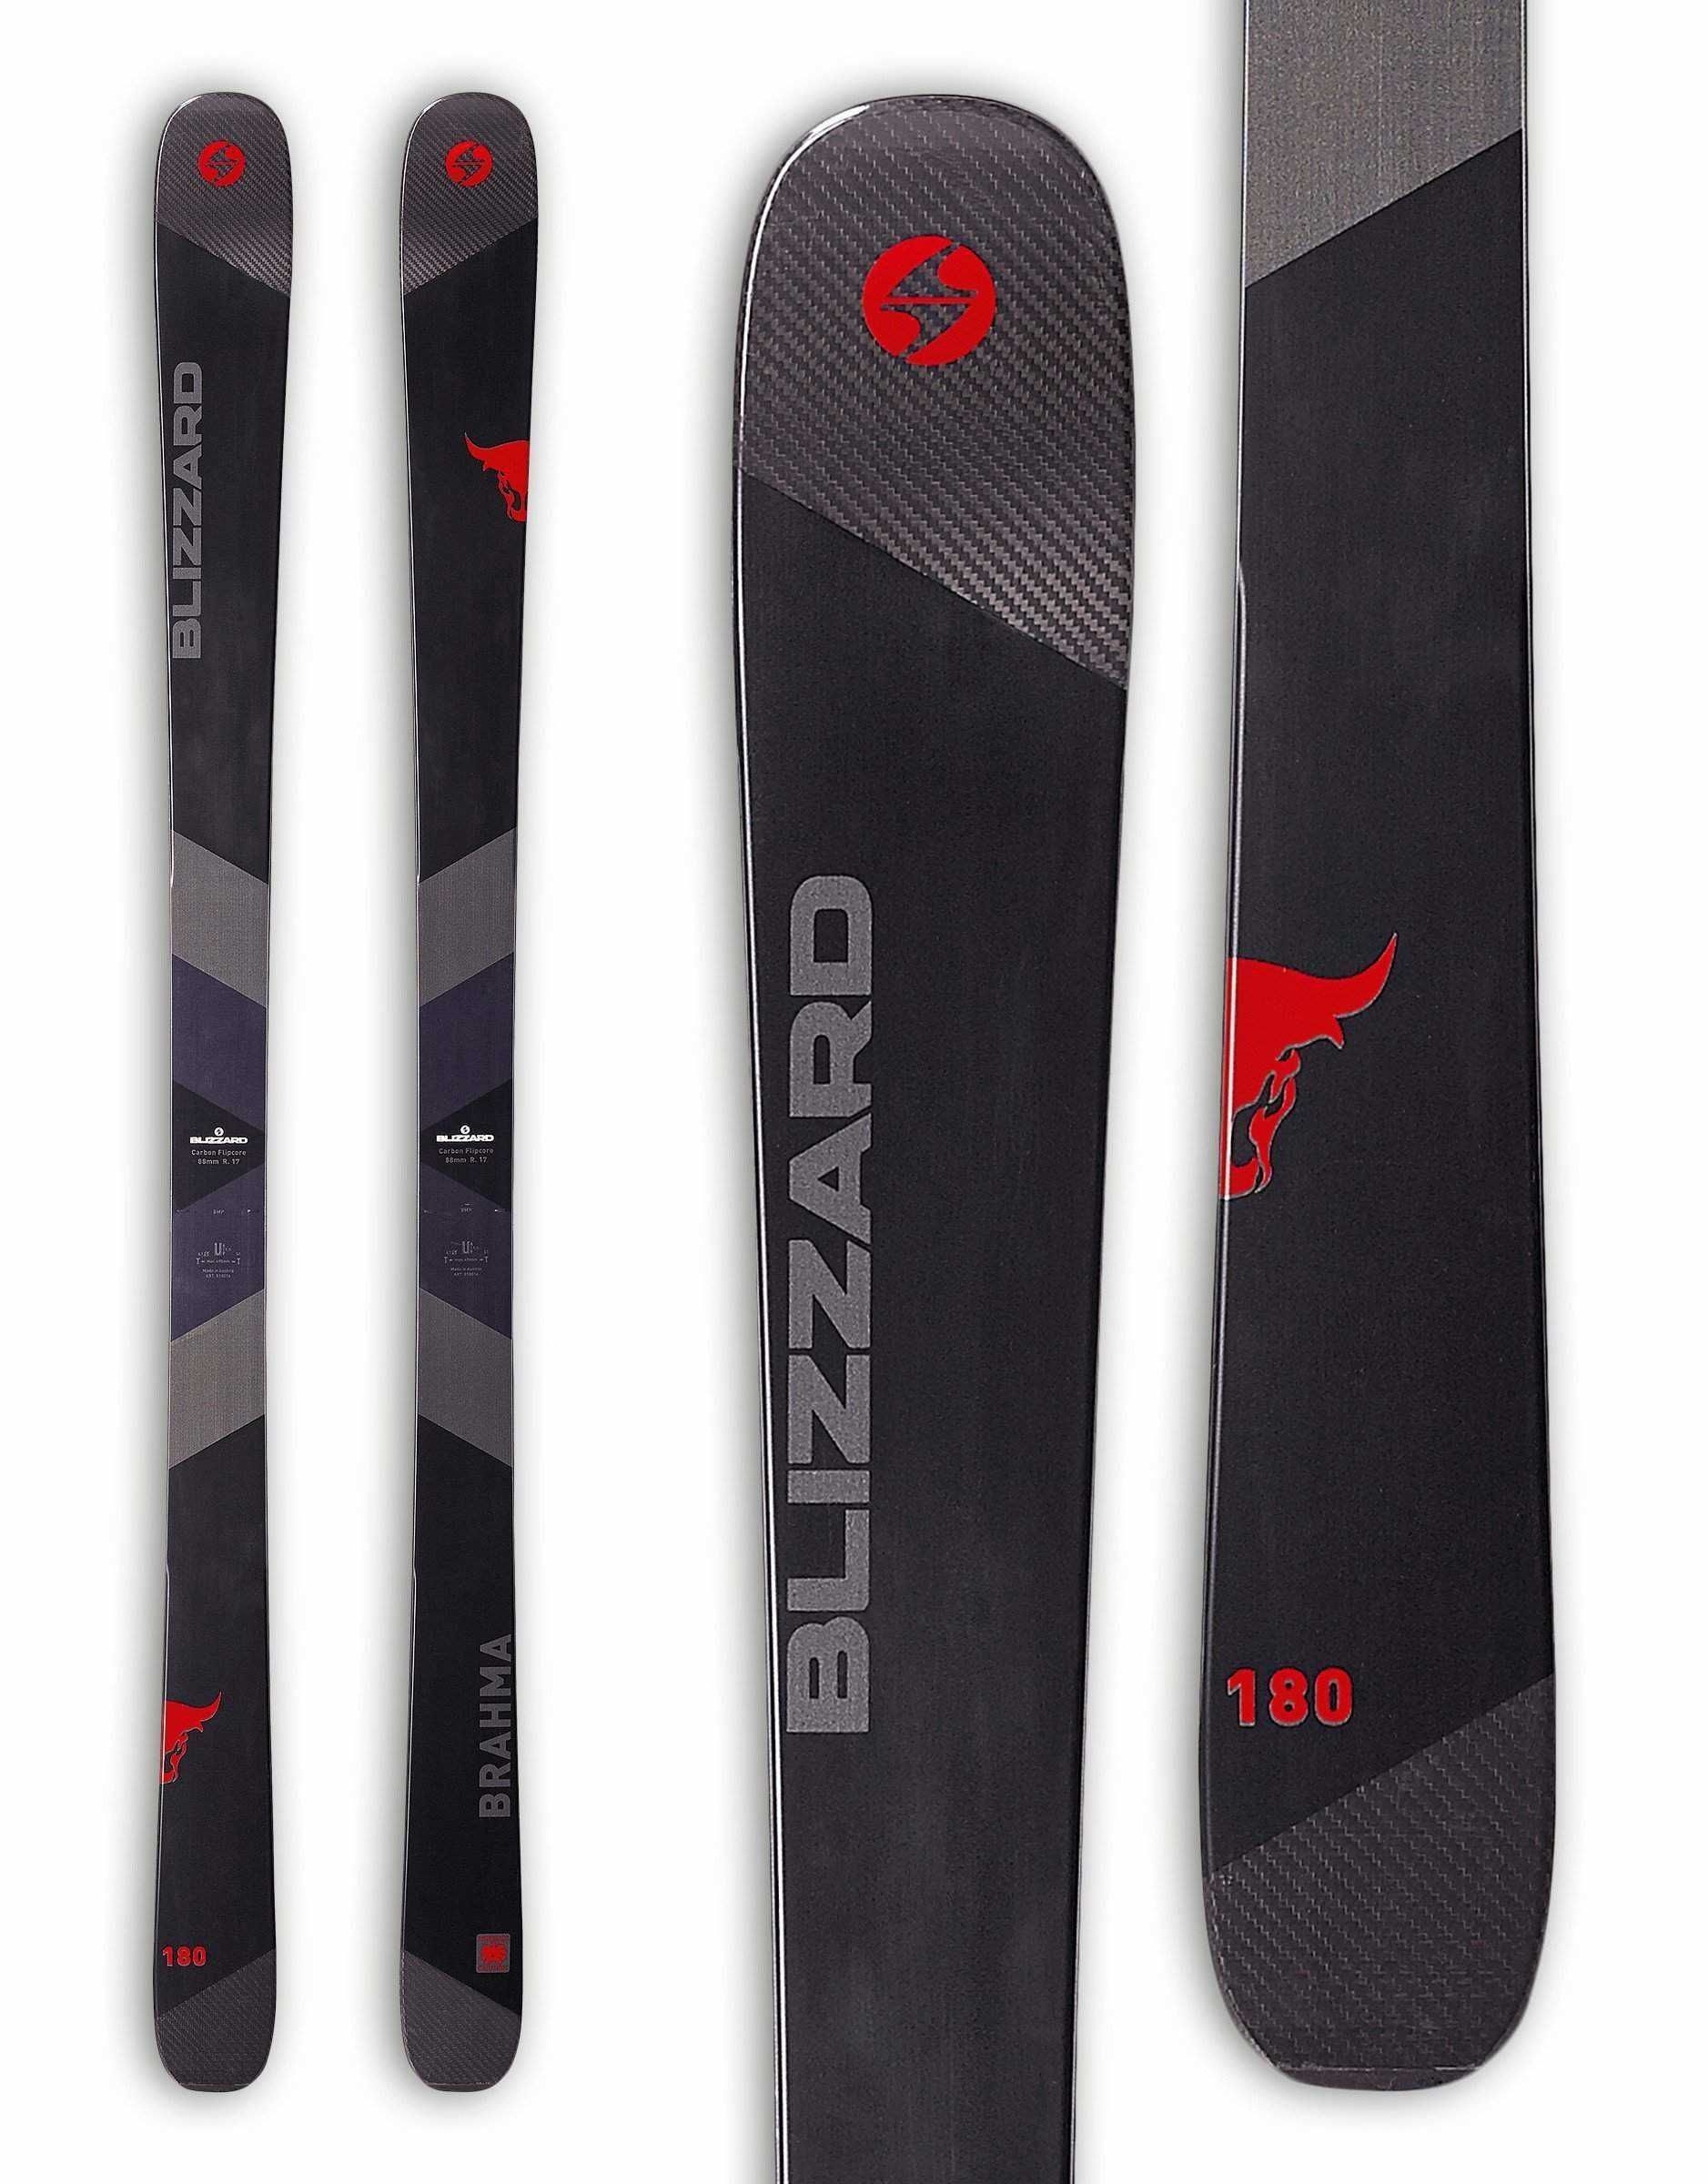 Pack Ski Test Brahma 2019 180cm + Fixations Griffon 13 Demo